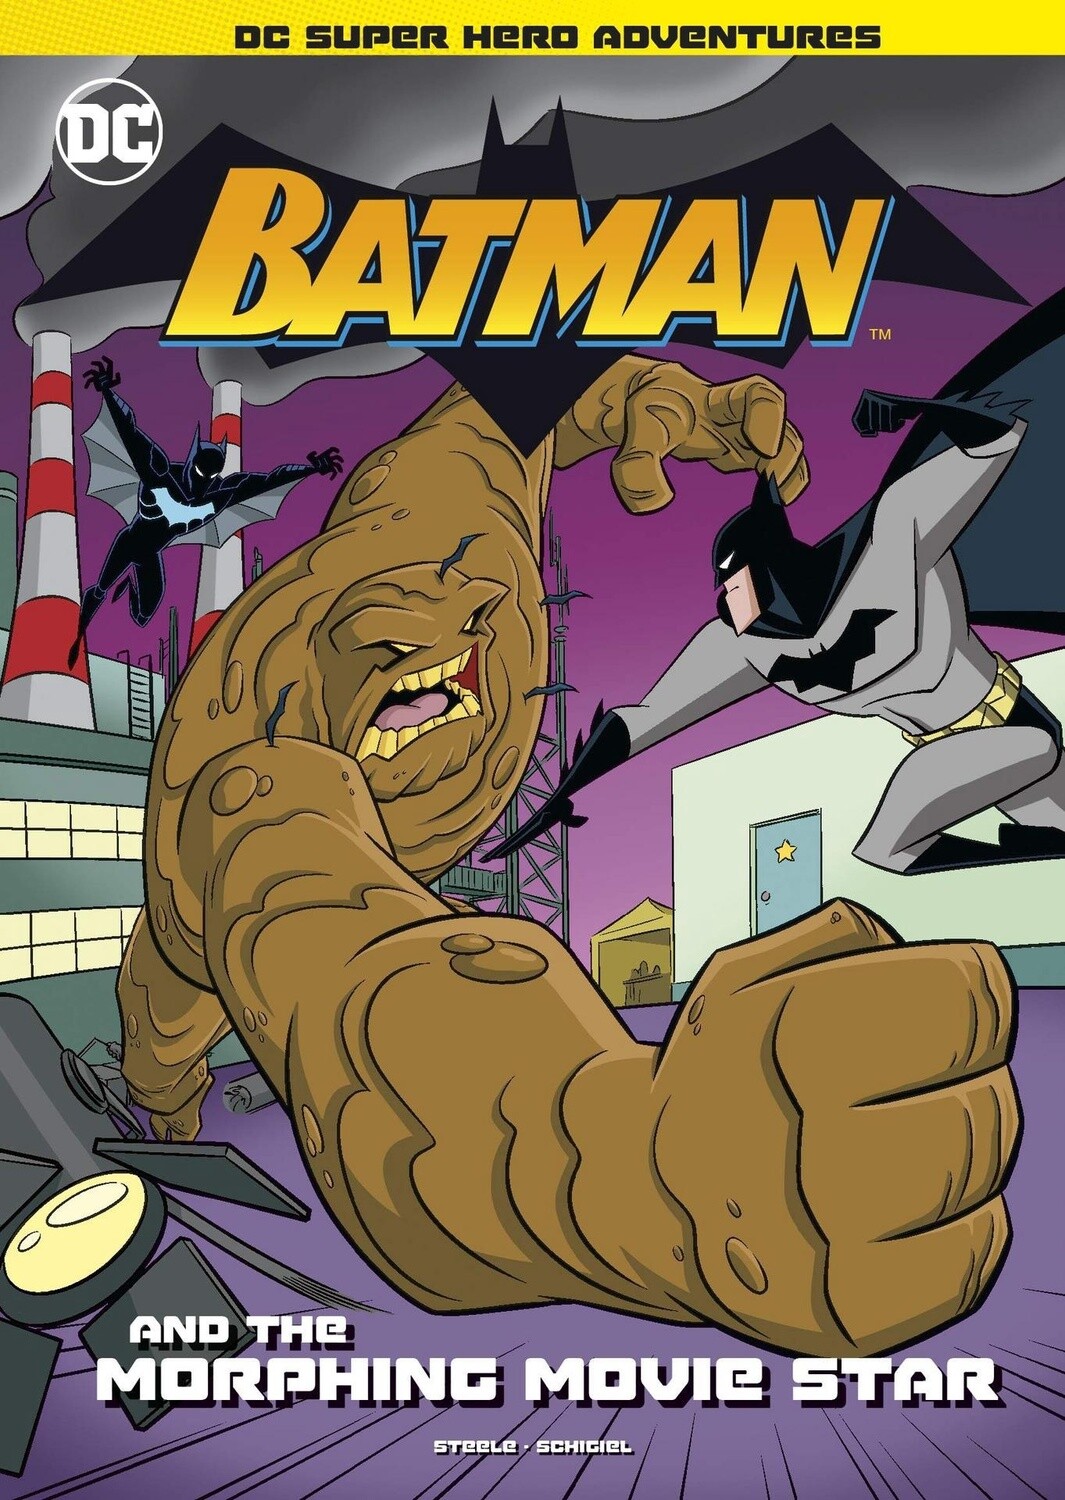 DC Superhero Adventures: Batman and the Morphing Movie Star